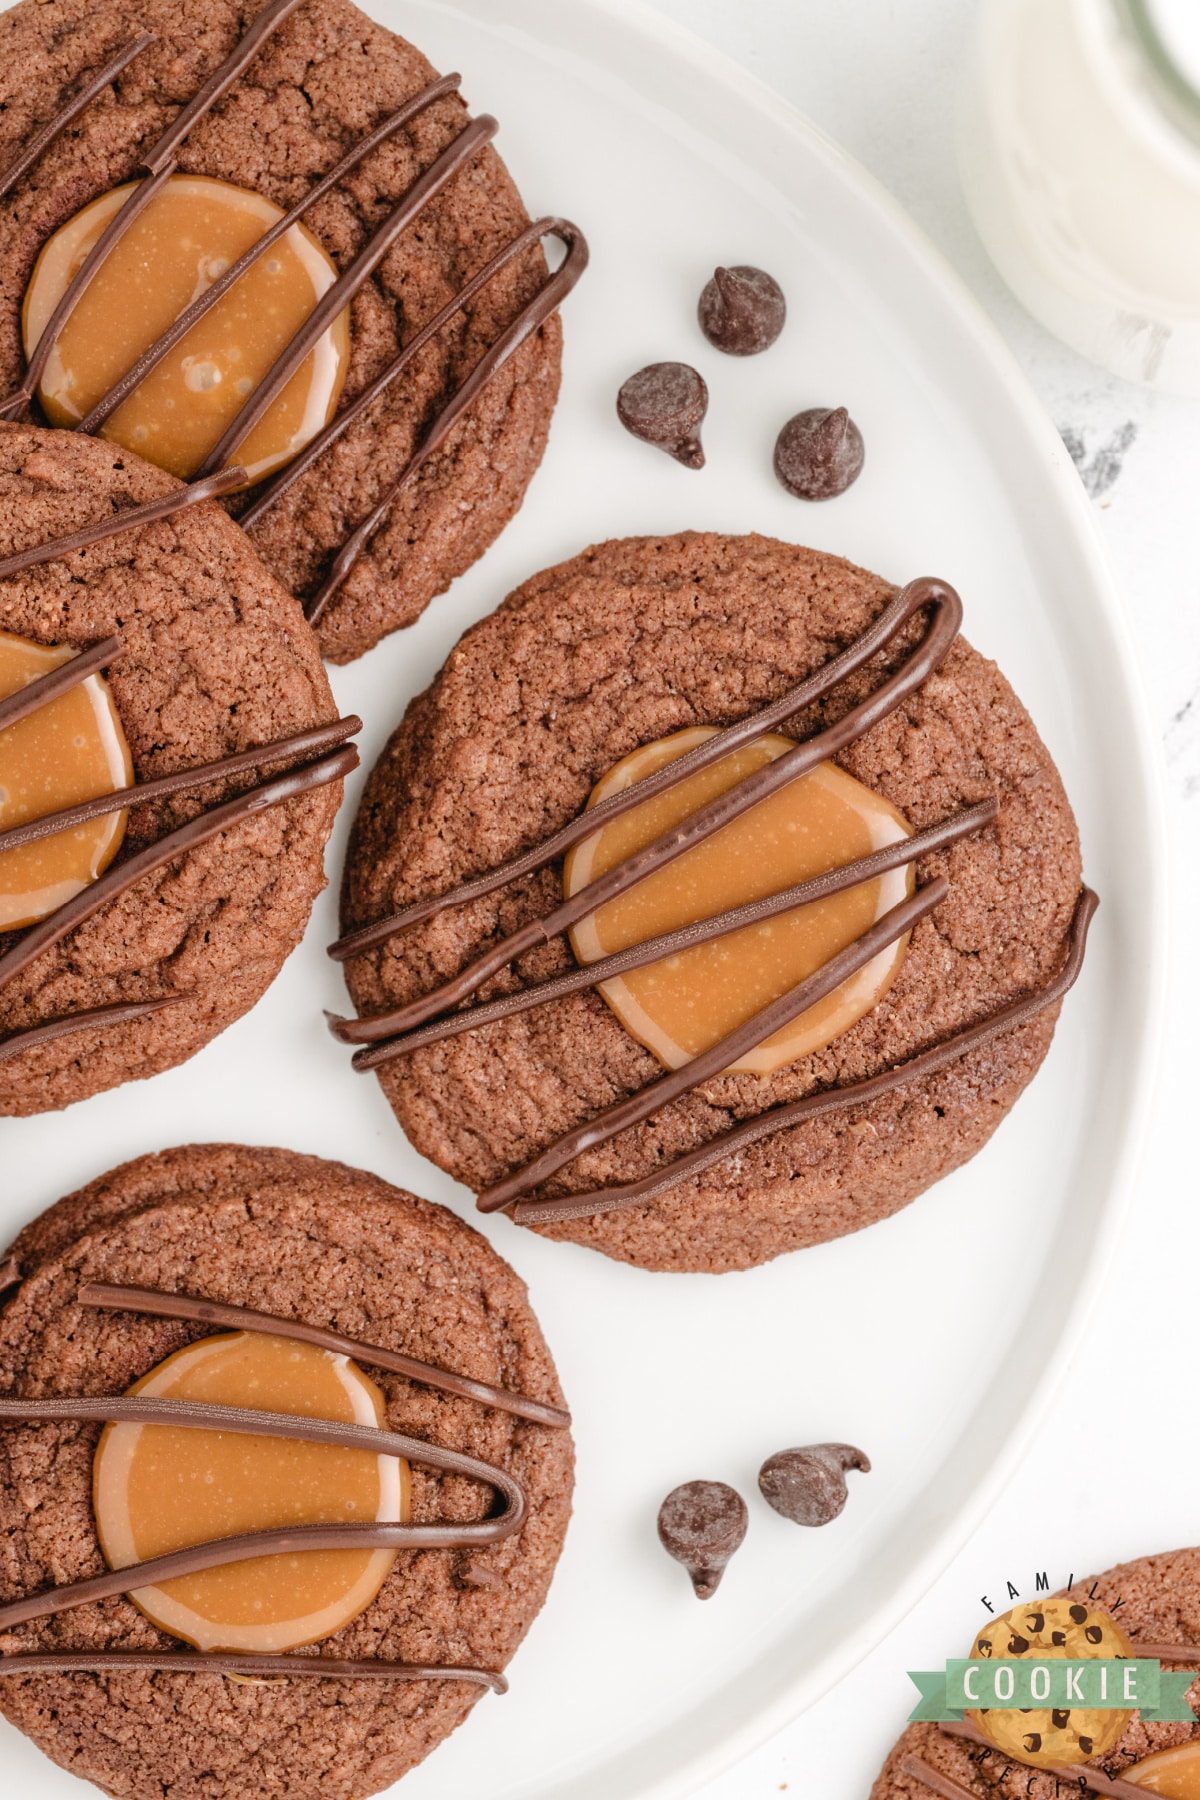 Chocolate thumbprint cookies with caramel filling. 